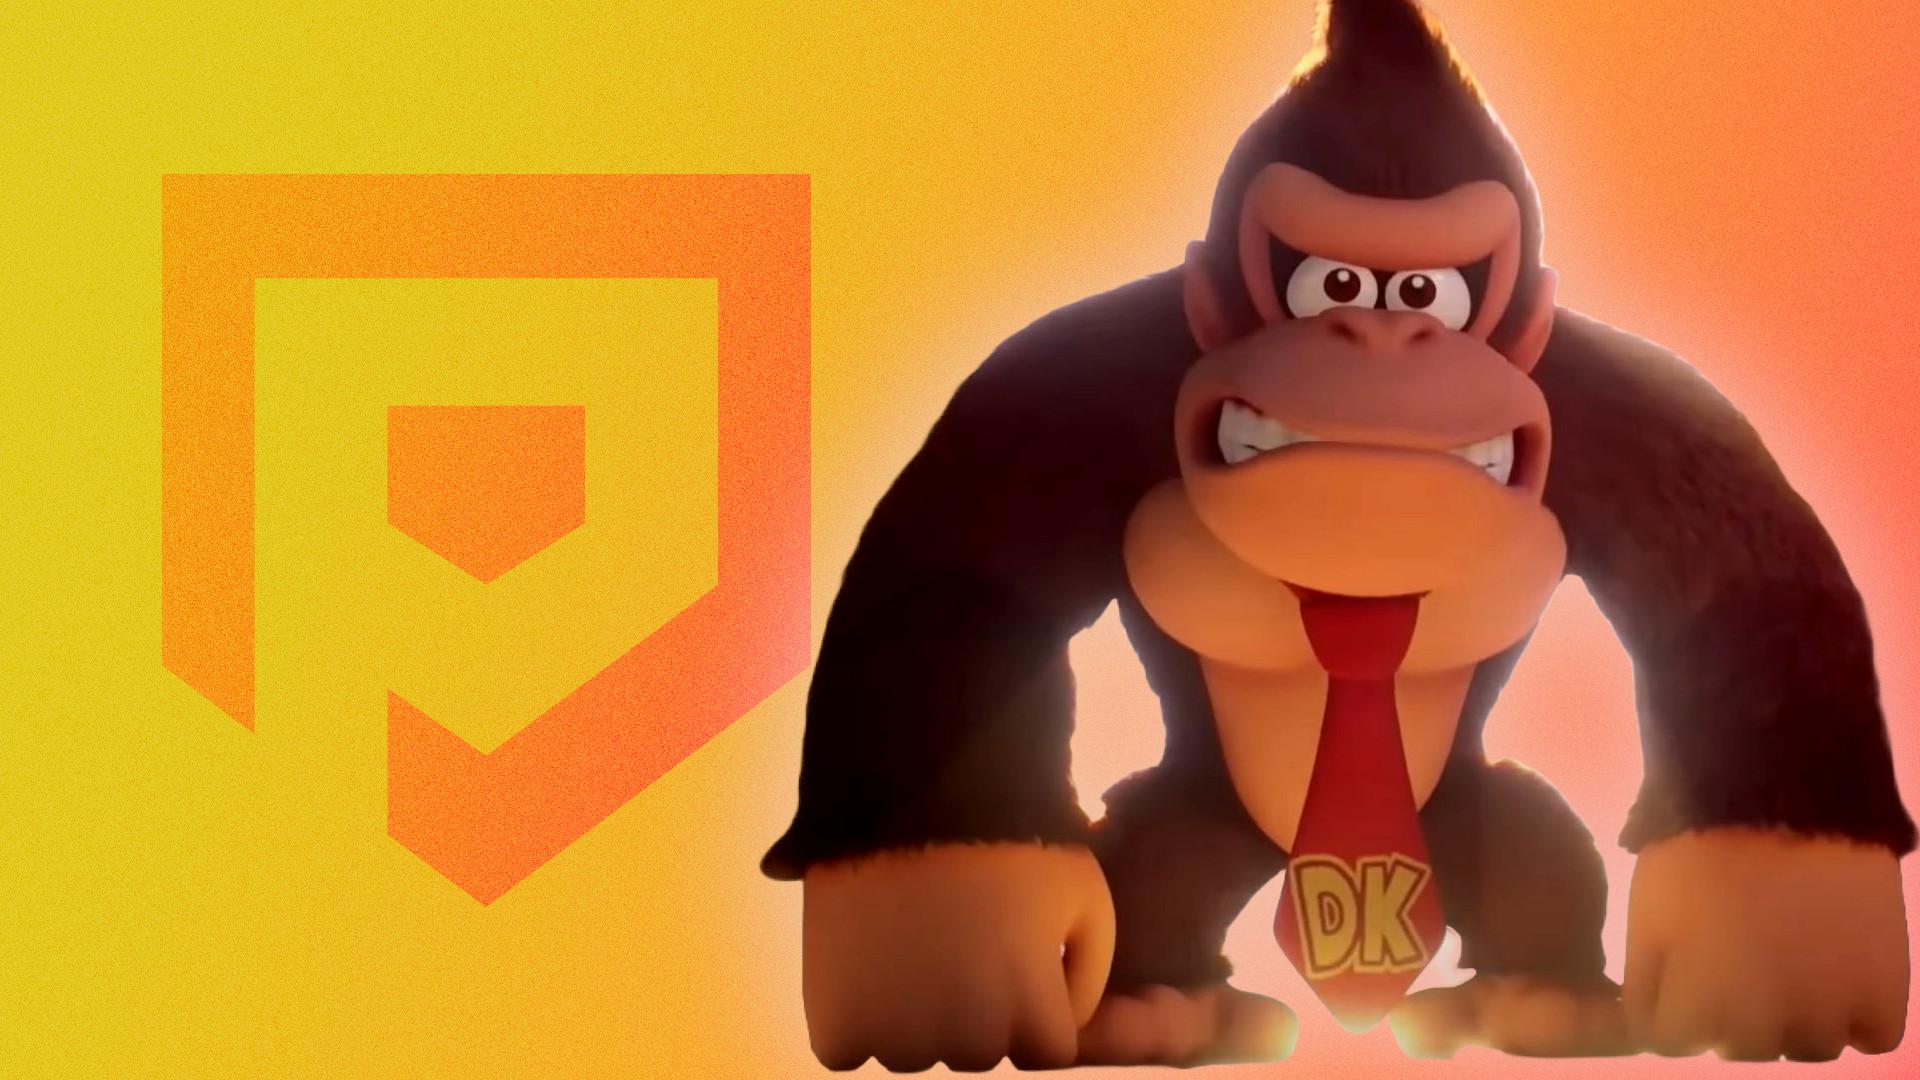 Mario vs. Donkey Kong launches on Nintendo Switch February 16, 2024., News  & Updates